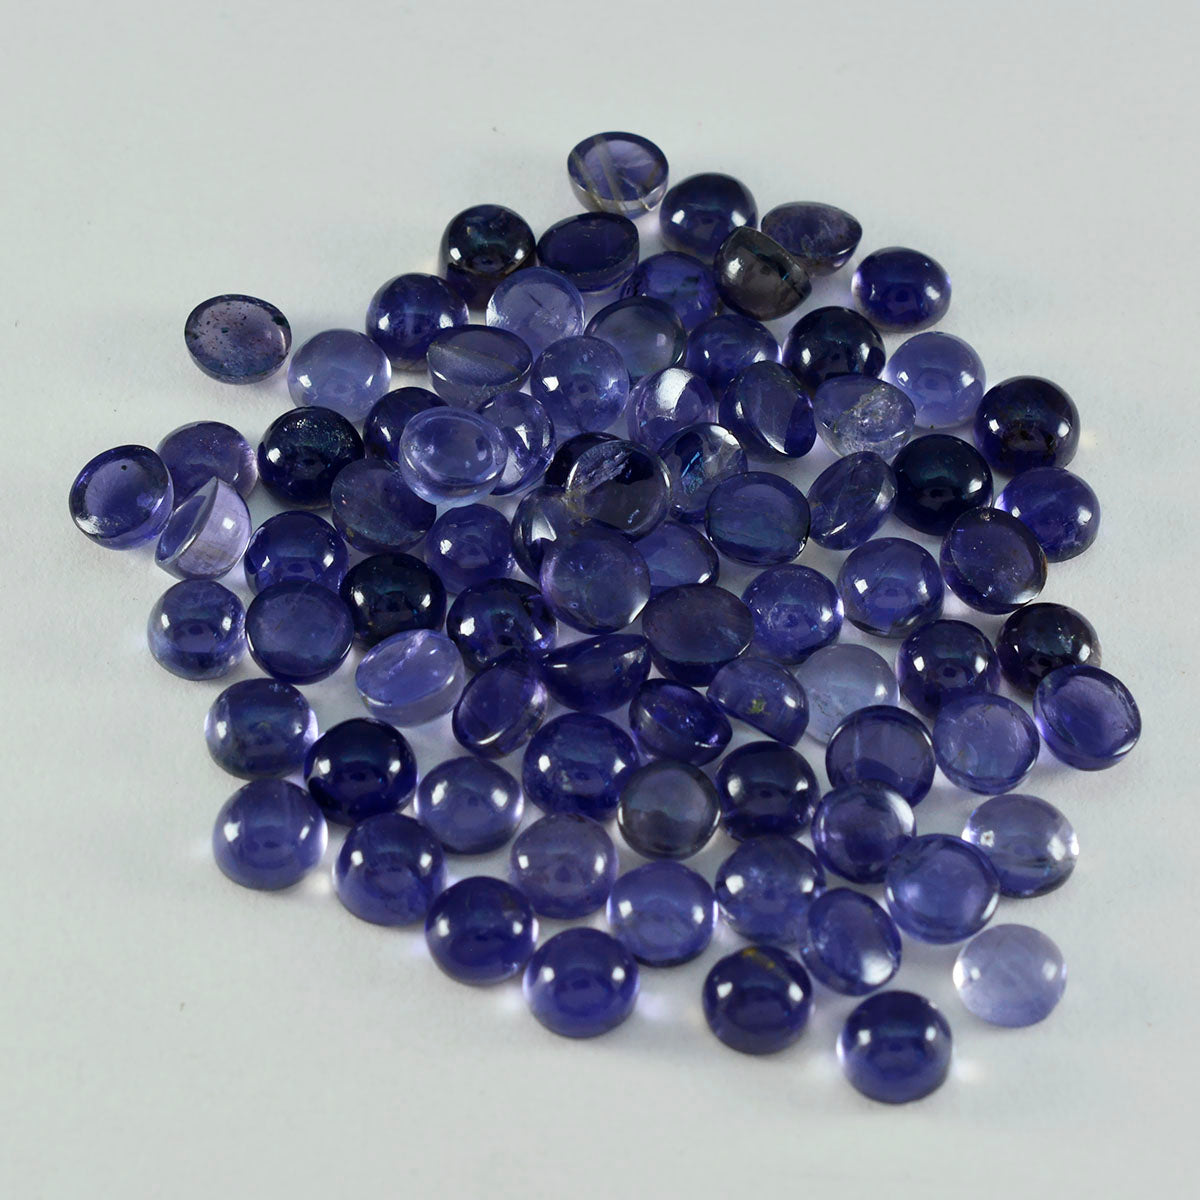 Riyogems 1PC Blue Iolite Cabochon 4x4 mm Round Shape A Quality Gems